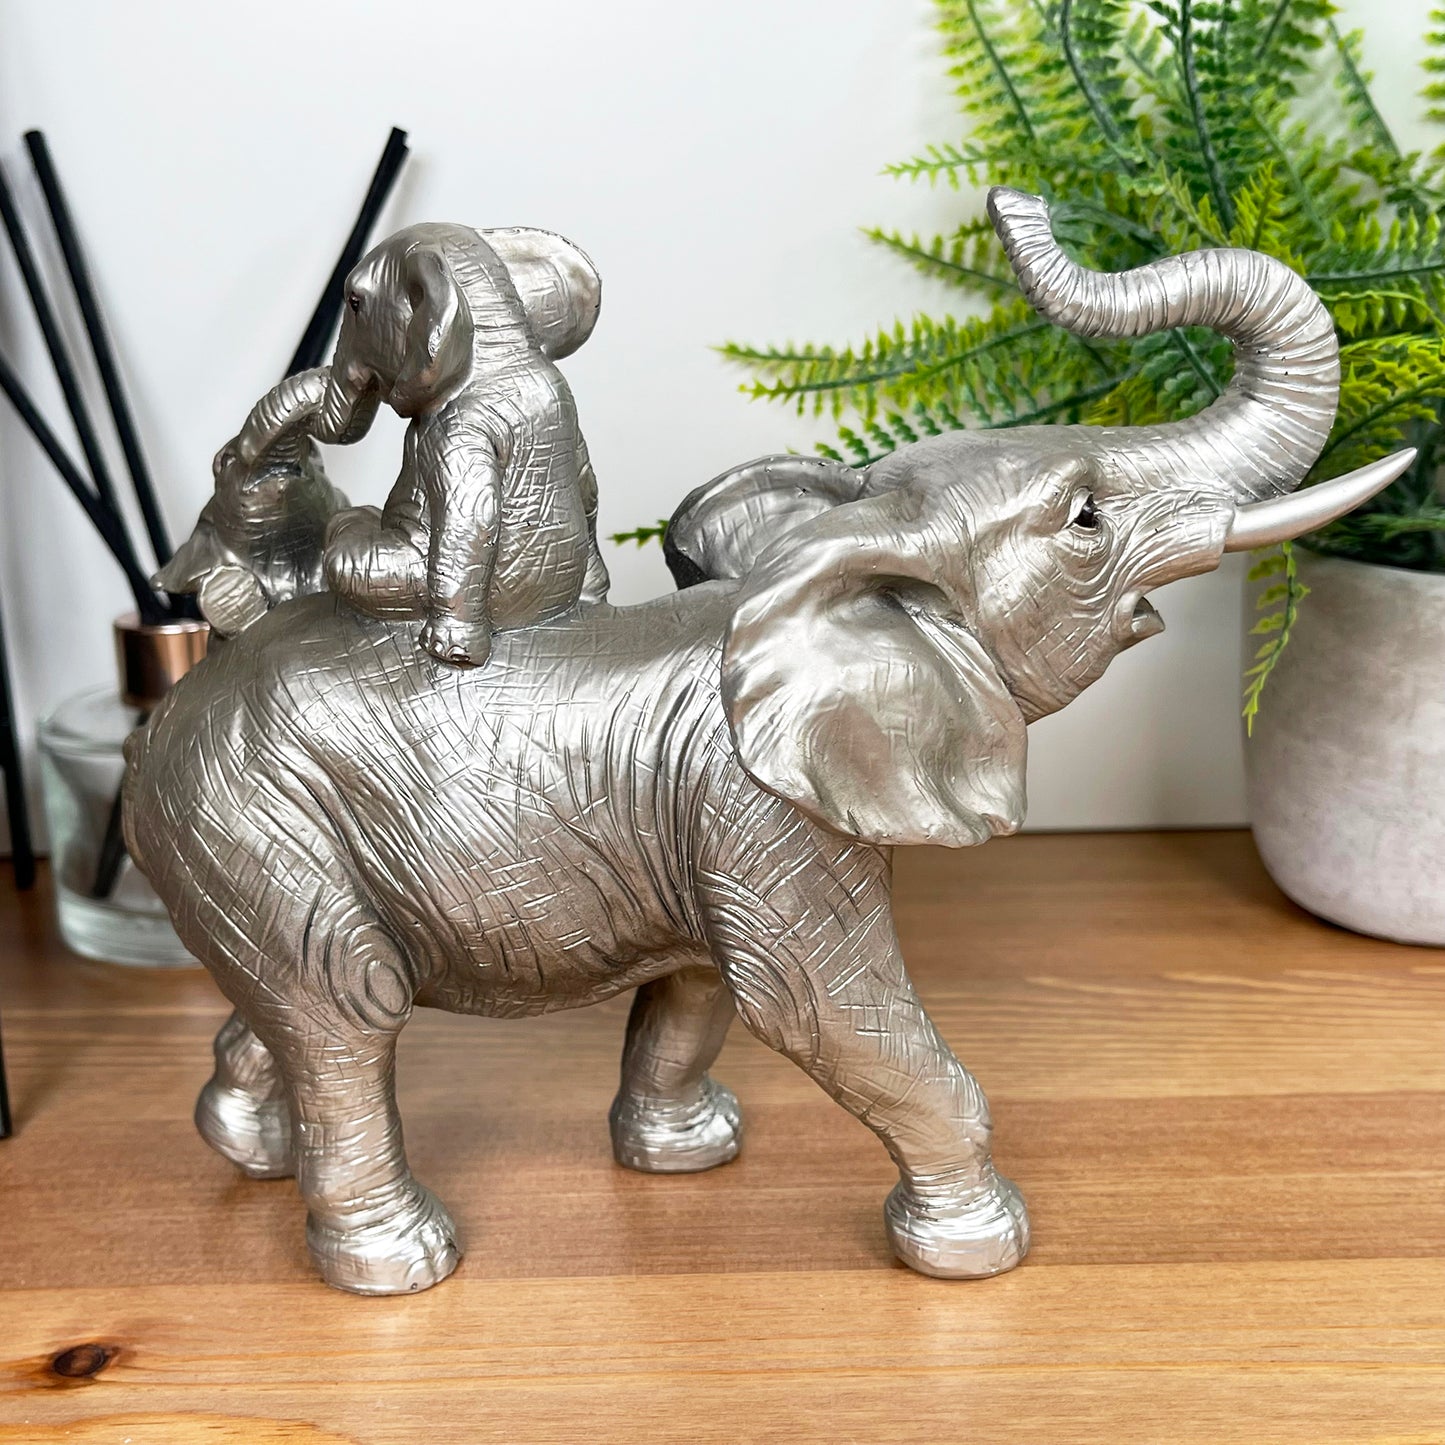 Silver Elephant With Calves Ornament